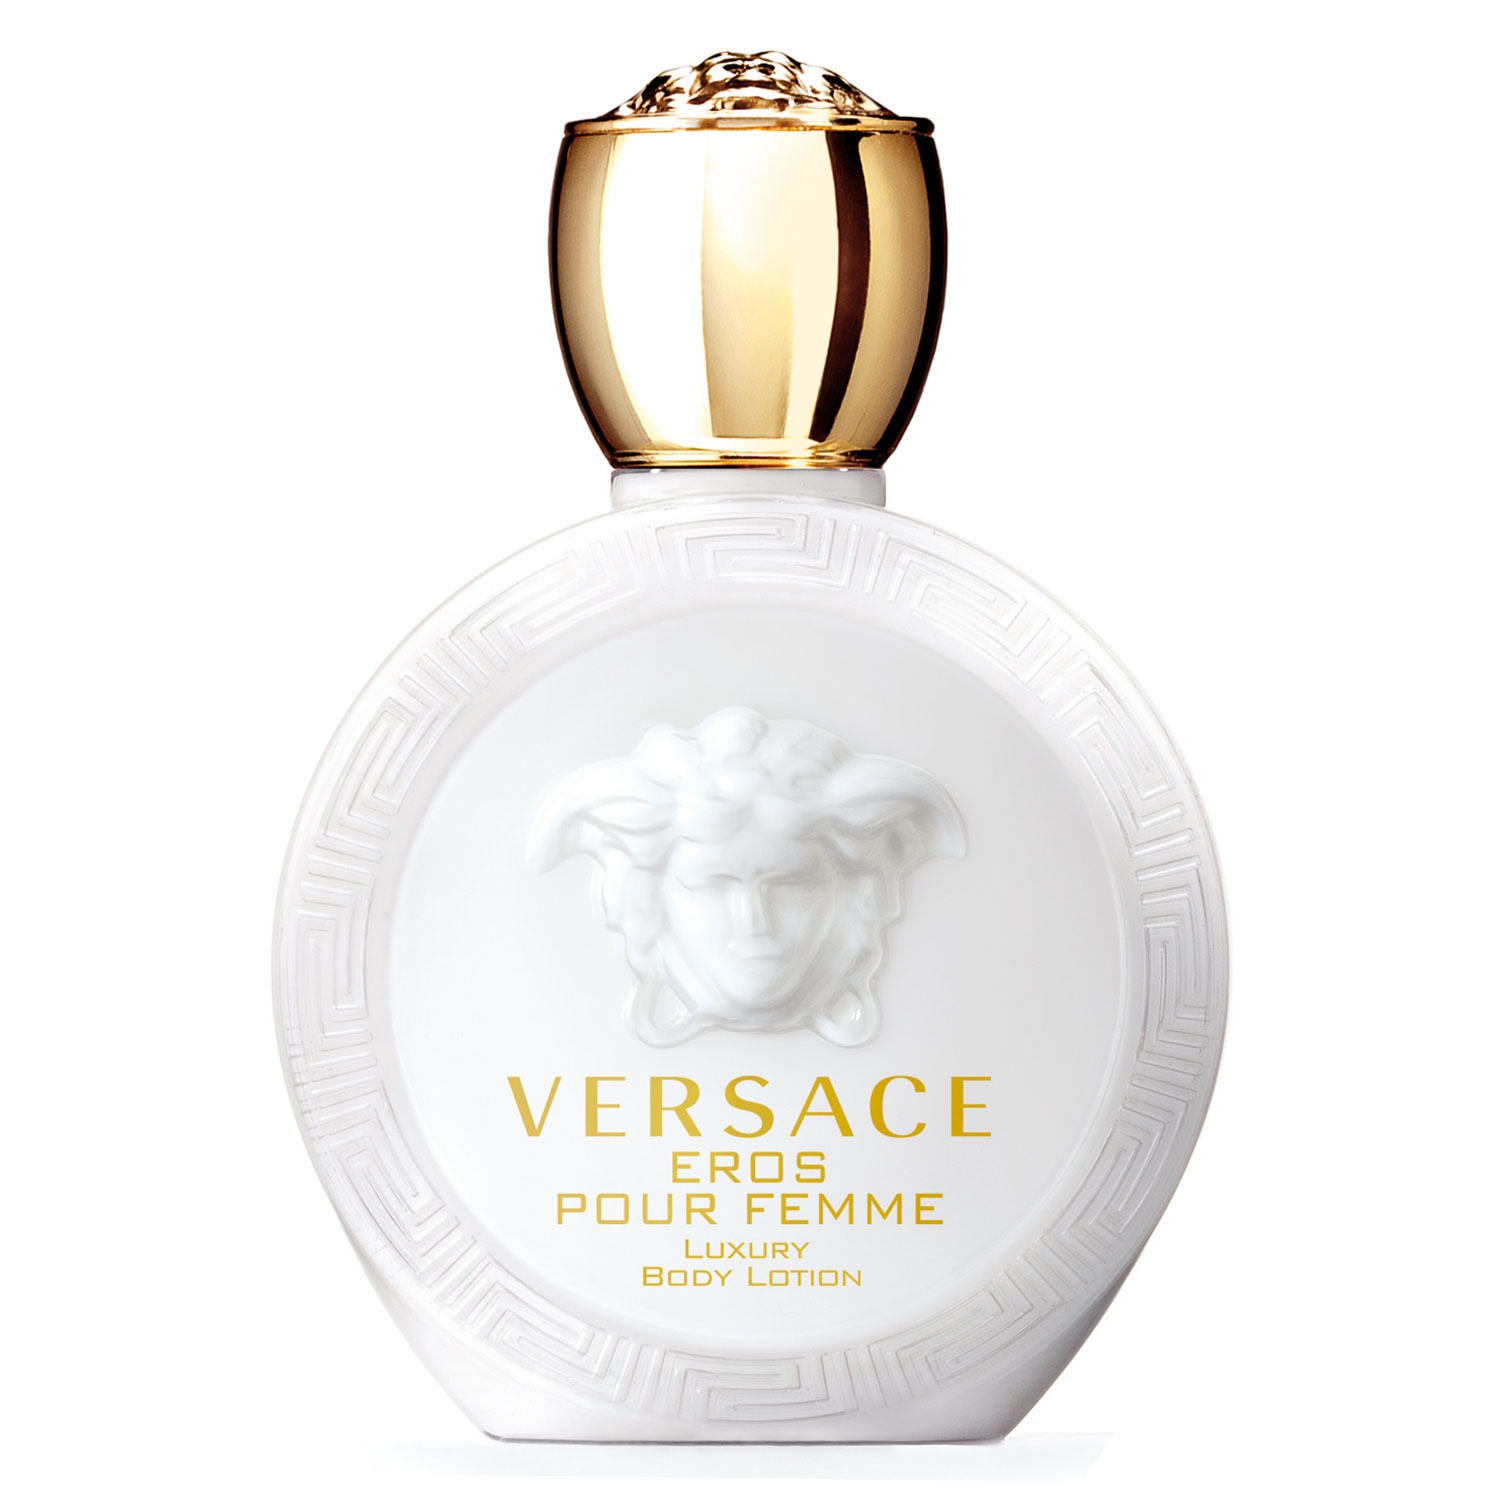 Produktbild von Versace Eros - Body Lotion Pour Femme